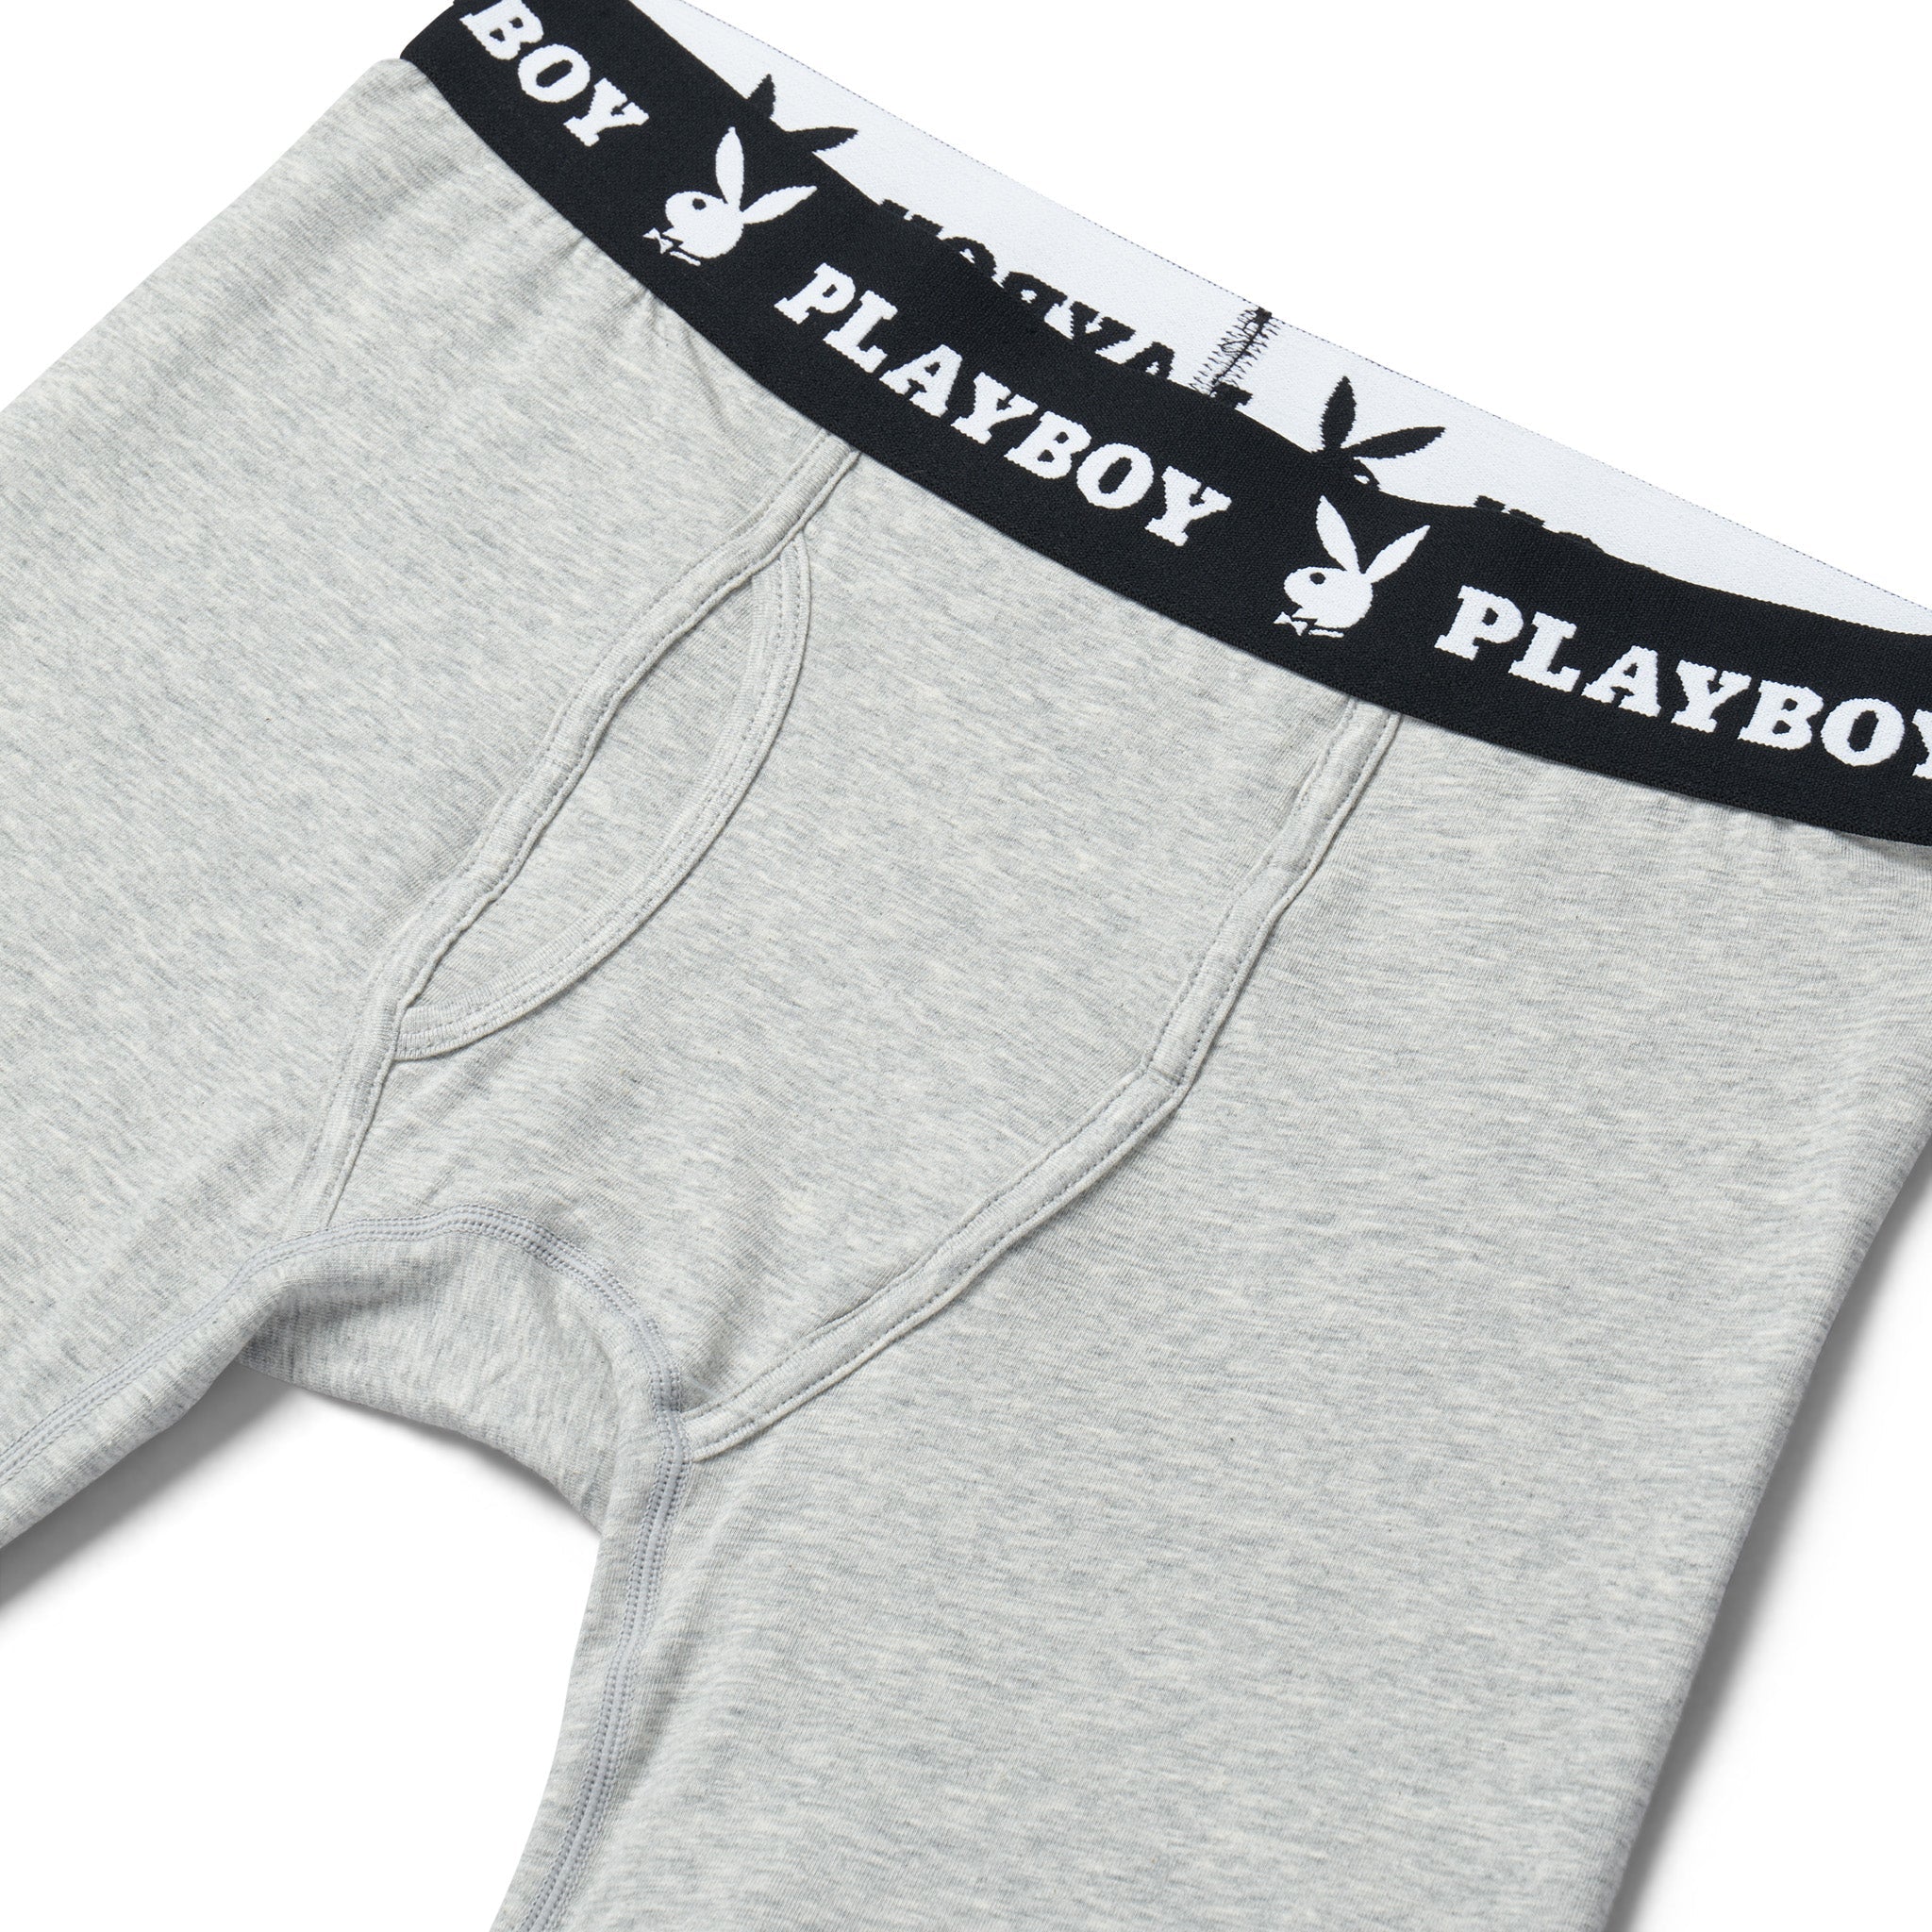 Playboy Men's Cotton Uno Boxer Briefs (Pack of 3)